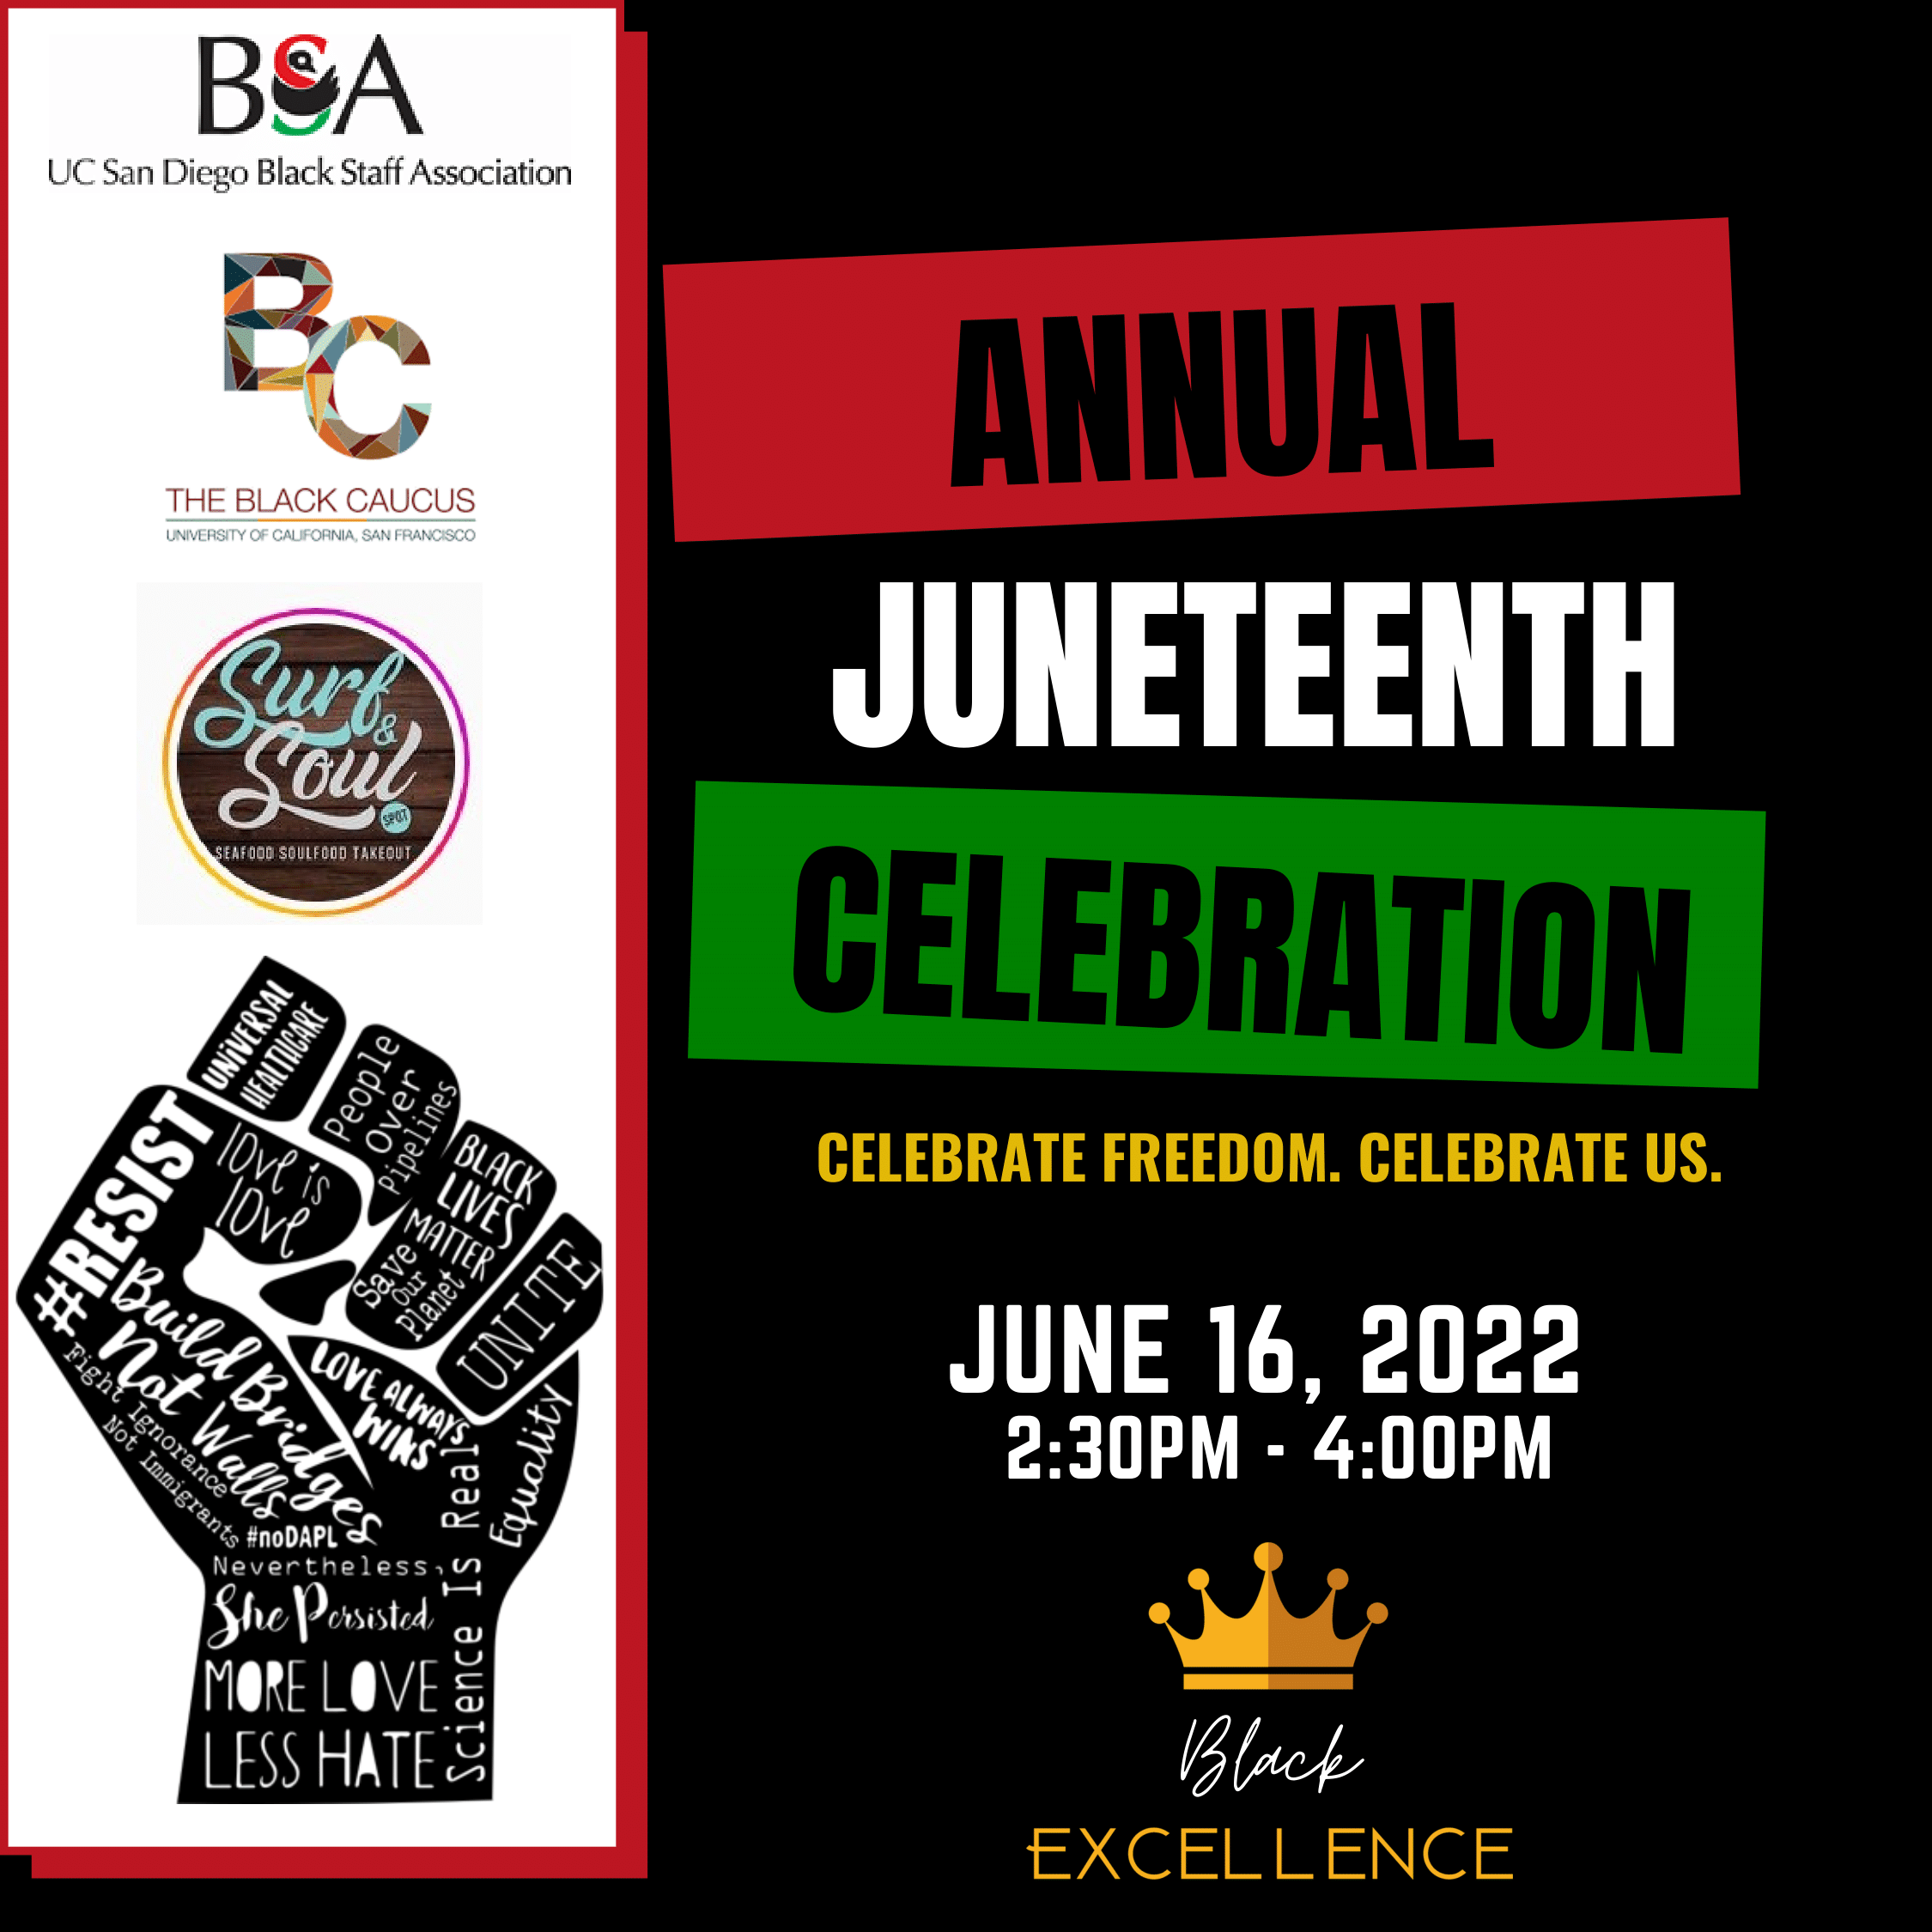 BSA-Juneteenth-Celebration-with-sponsors---2022-1.png